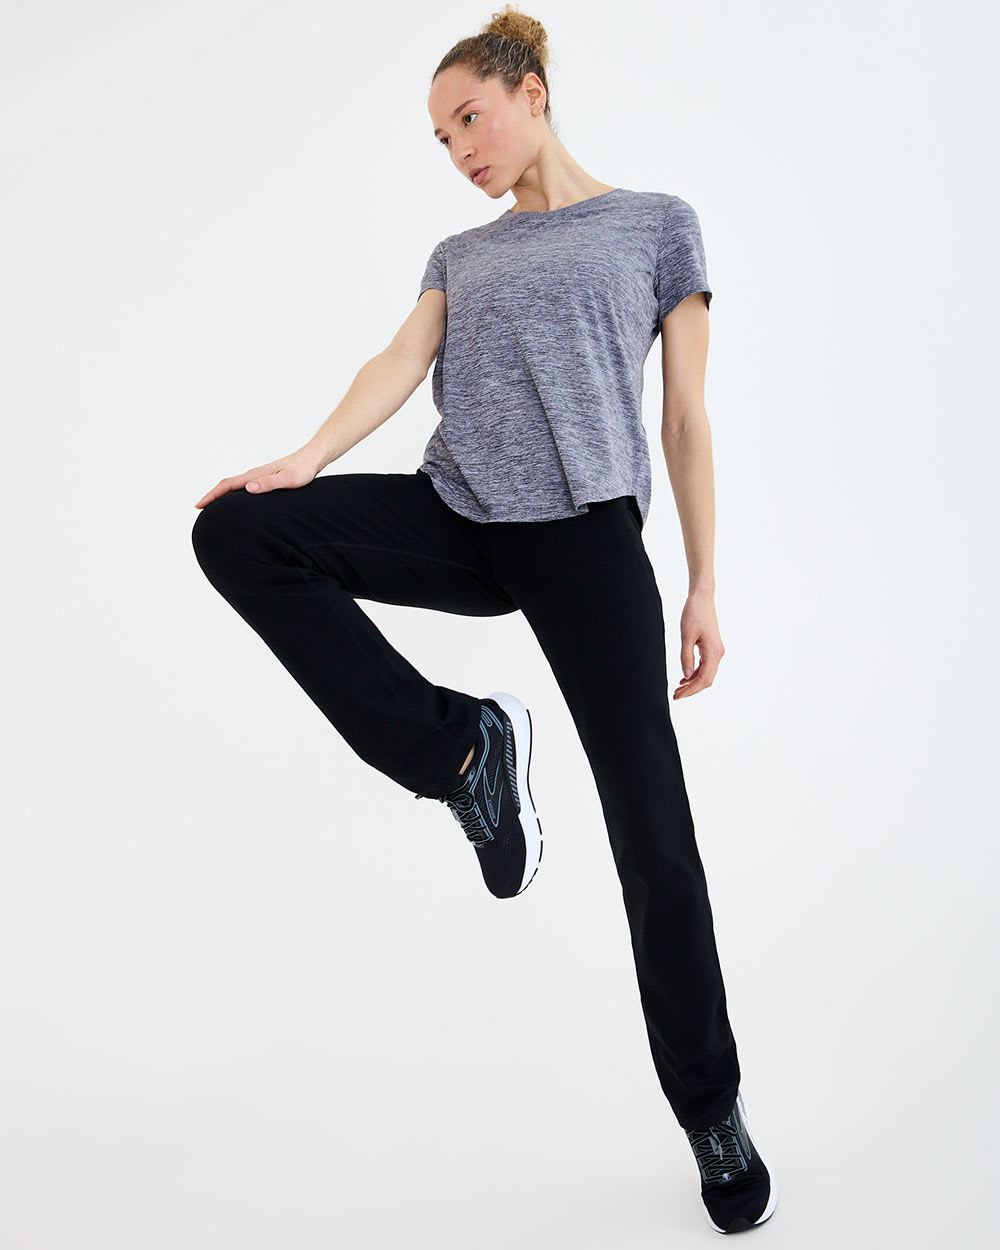  Extra Tall Womens Straight Leg Yoga Pants Workout Pants Slim  Fit,37,Black,Size L